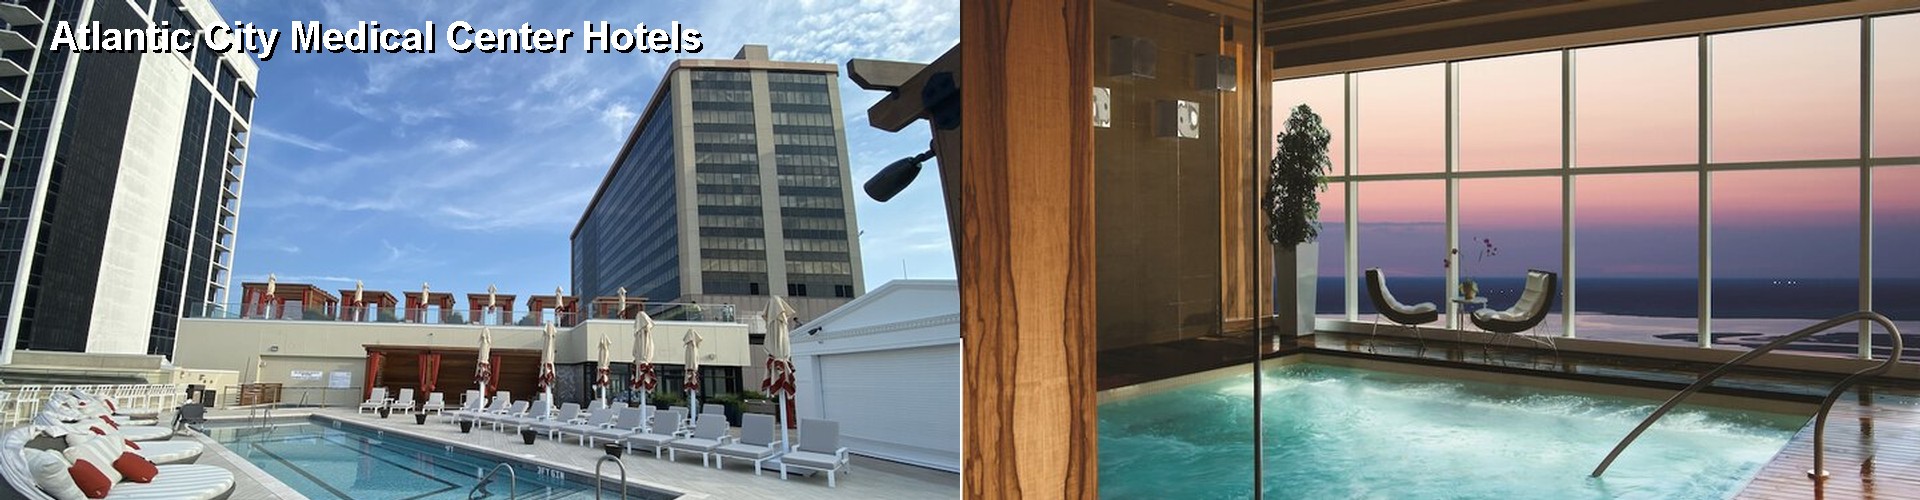 4 Best Hotels near Atlantic City Medical Center